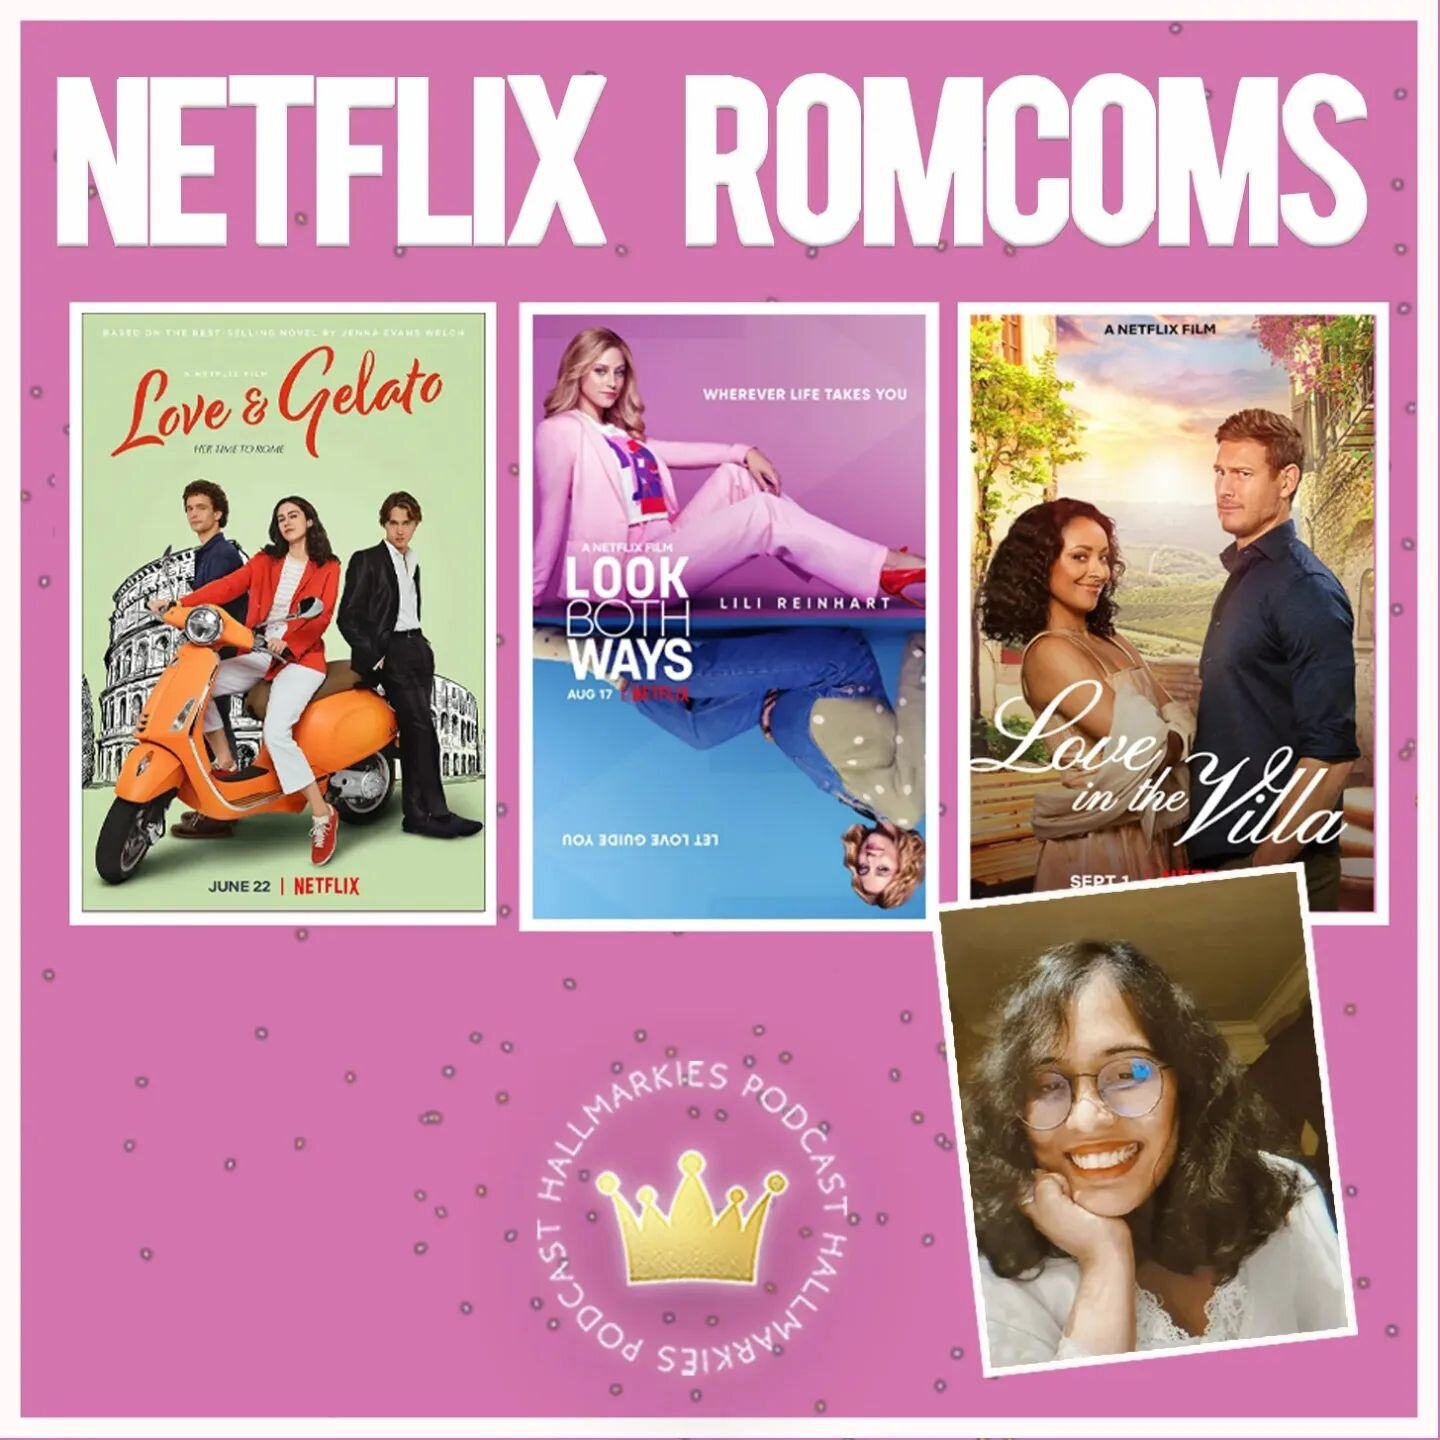 Bonus: Talking Summer Netflix Romcoms with Natasha Alvar (#loveinthevilla #lookbothways)
@litmysoul
#Netflix @netflix @rachels_reviews

Available wherever you listen to podcasts 

Link in Bio 

YT: https://youtu.be/RnRWn1mHslg
Audio: https://podcasts